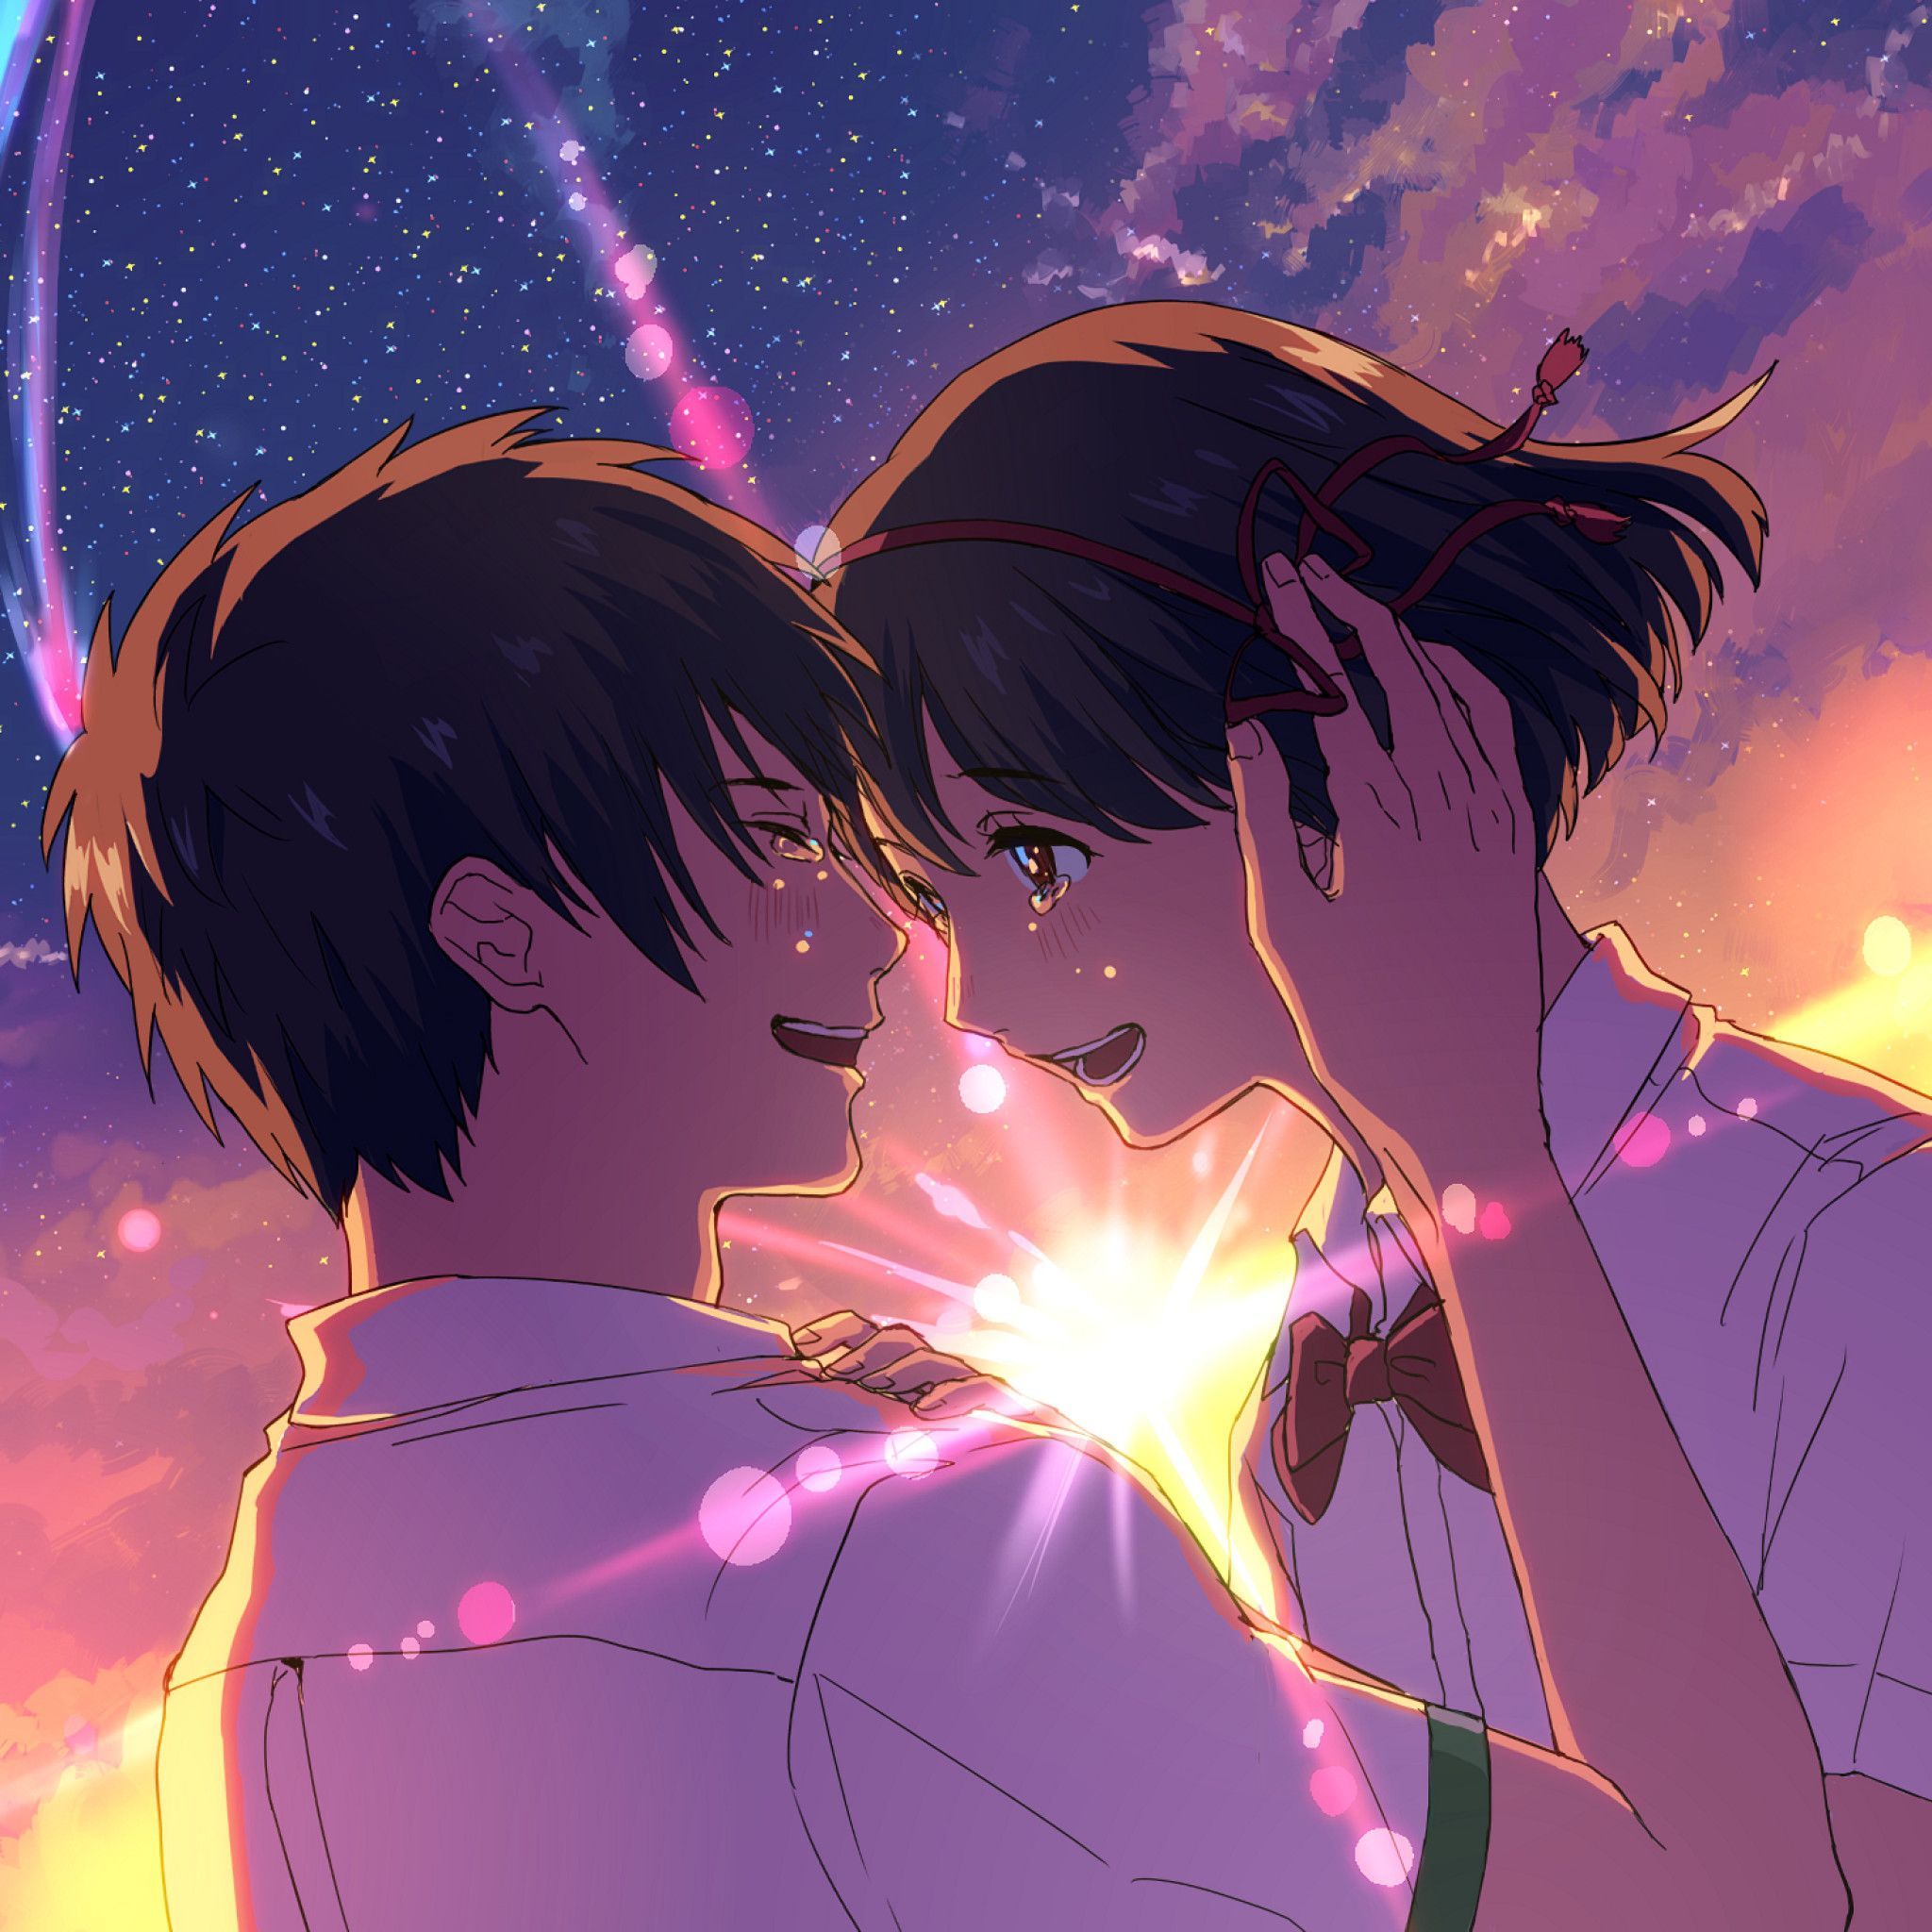 Kawaii! The 18 Cutest Anime Couples - ReelRundown